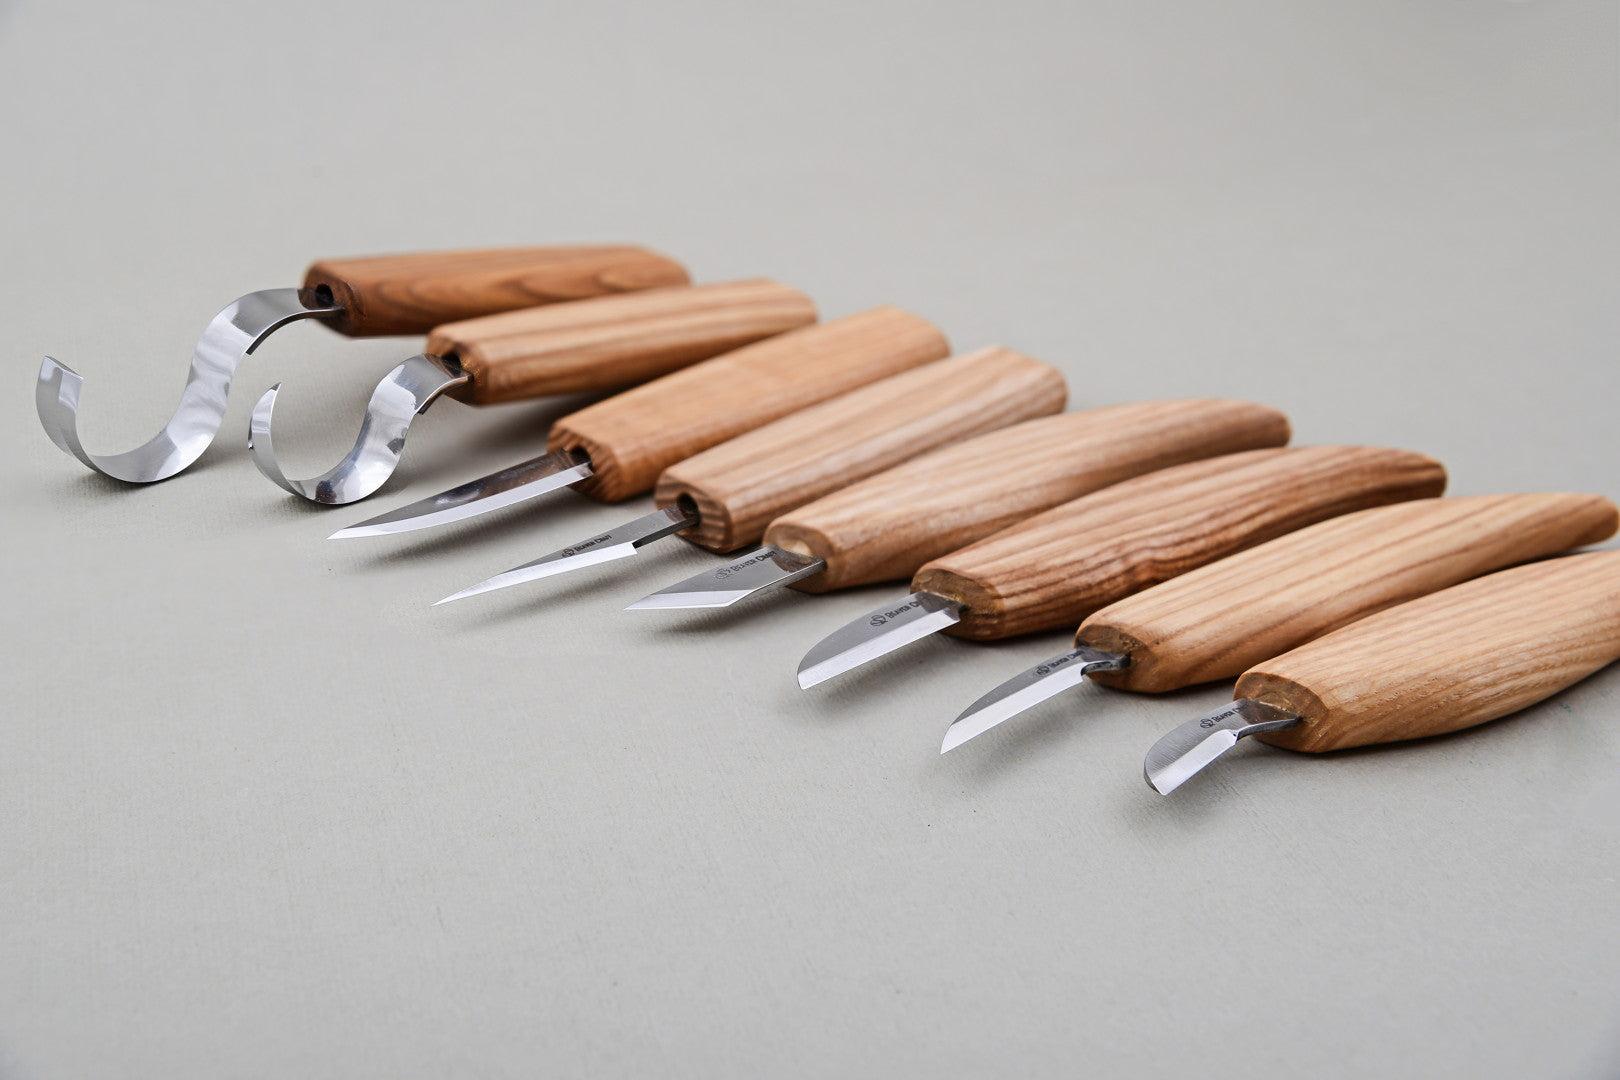 8-Piece Engraving Tool Body & Knives, ShopBot Tools